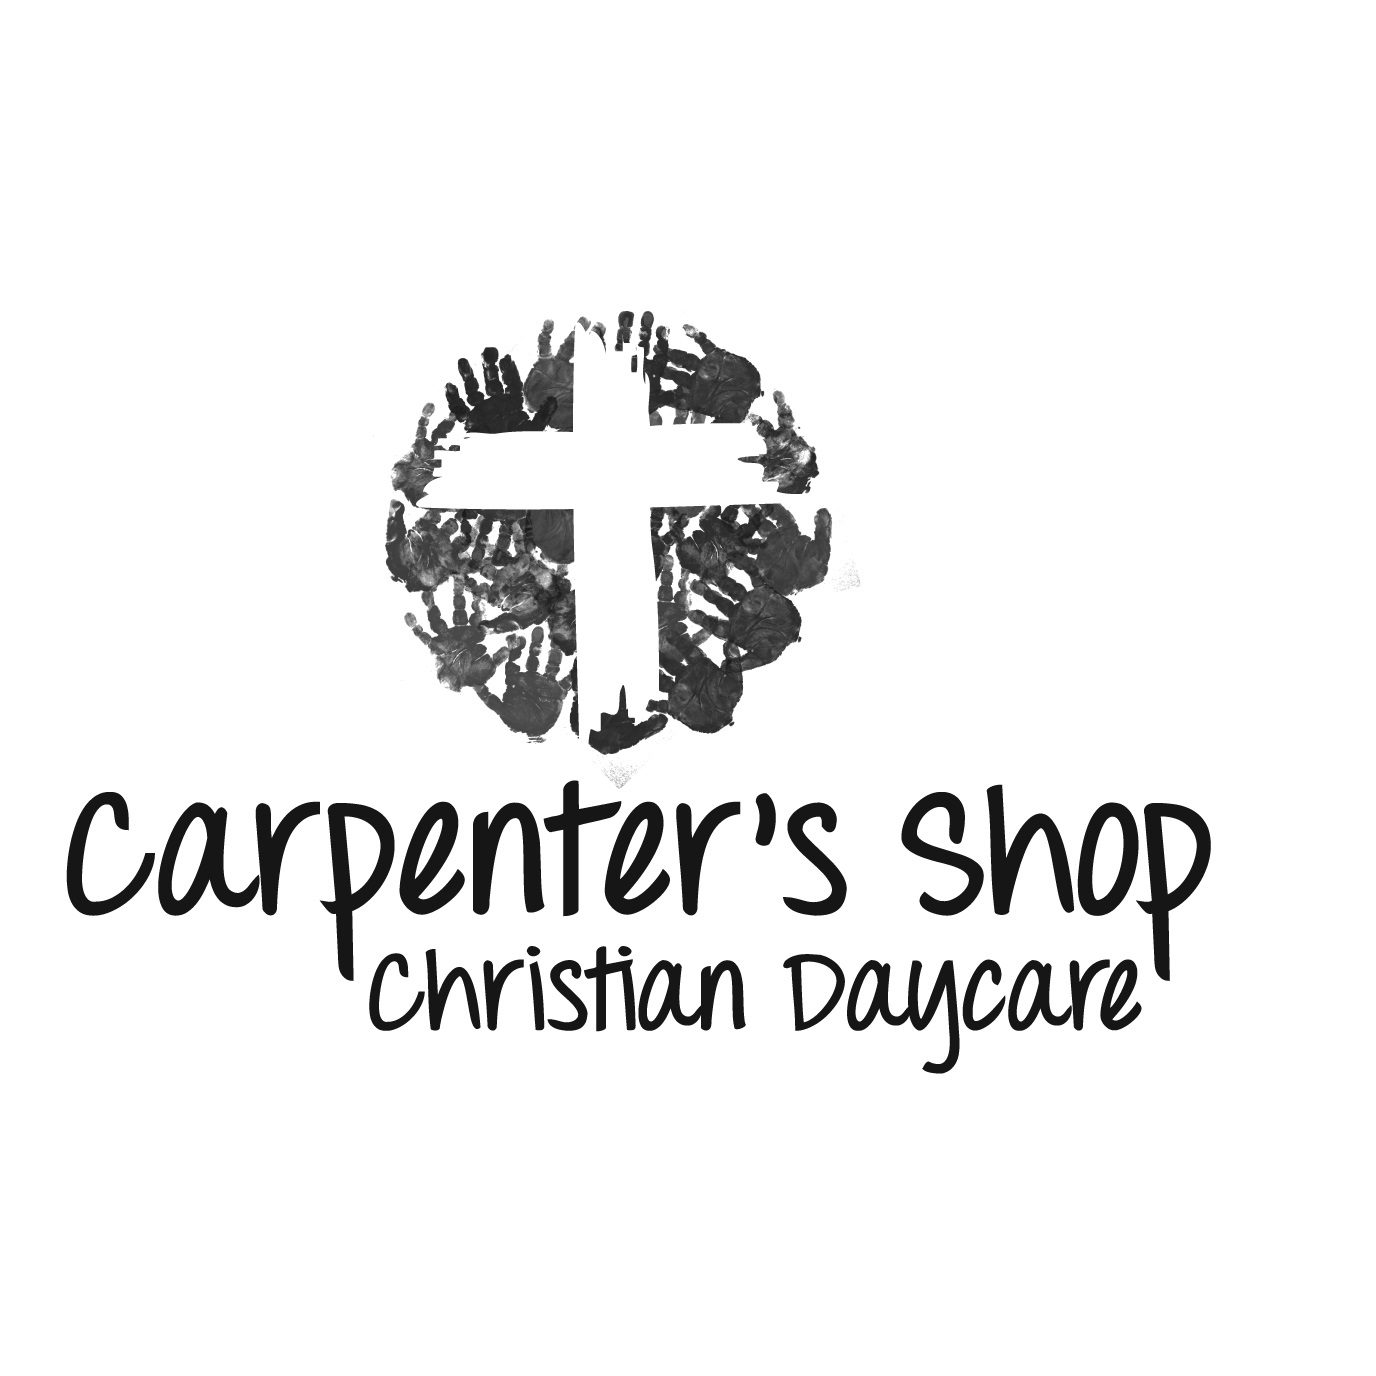 Carpenter's Shop Christian Daycare job - Whitefish Bay, WI